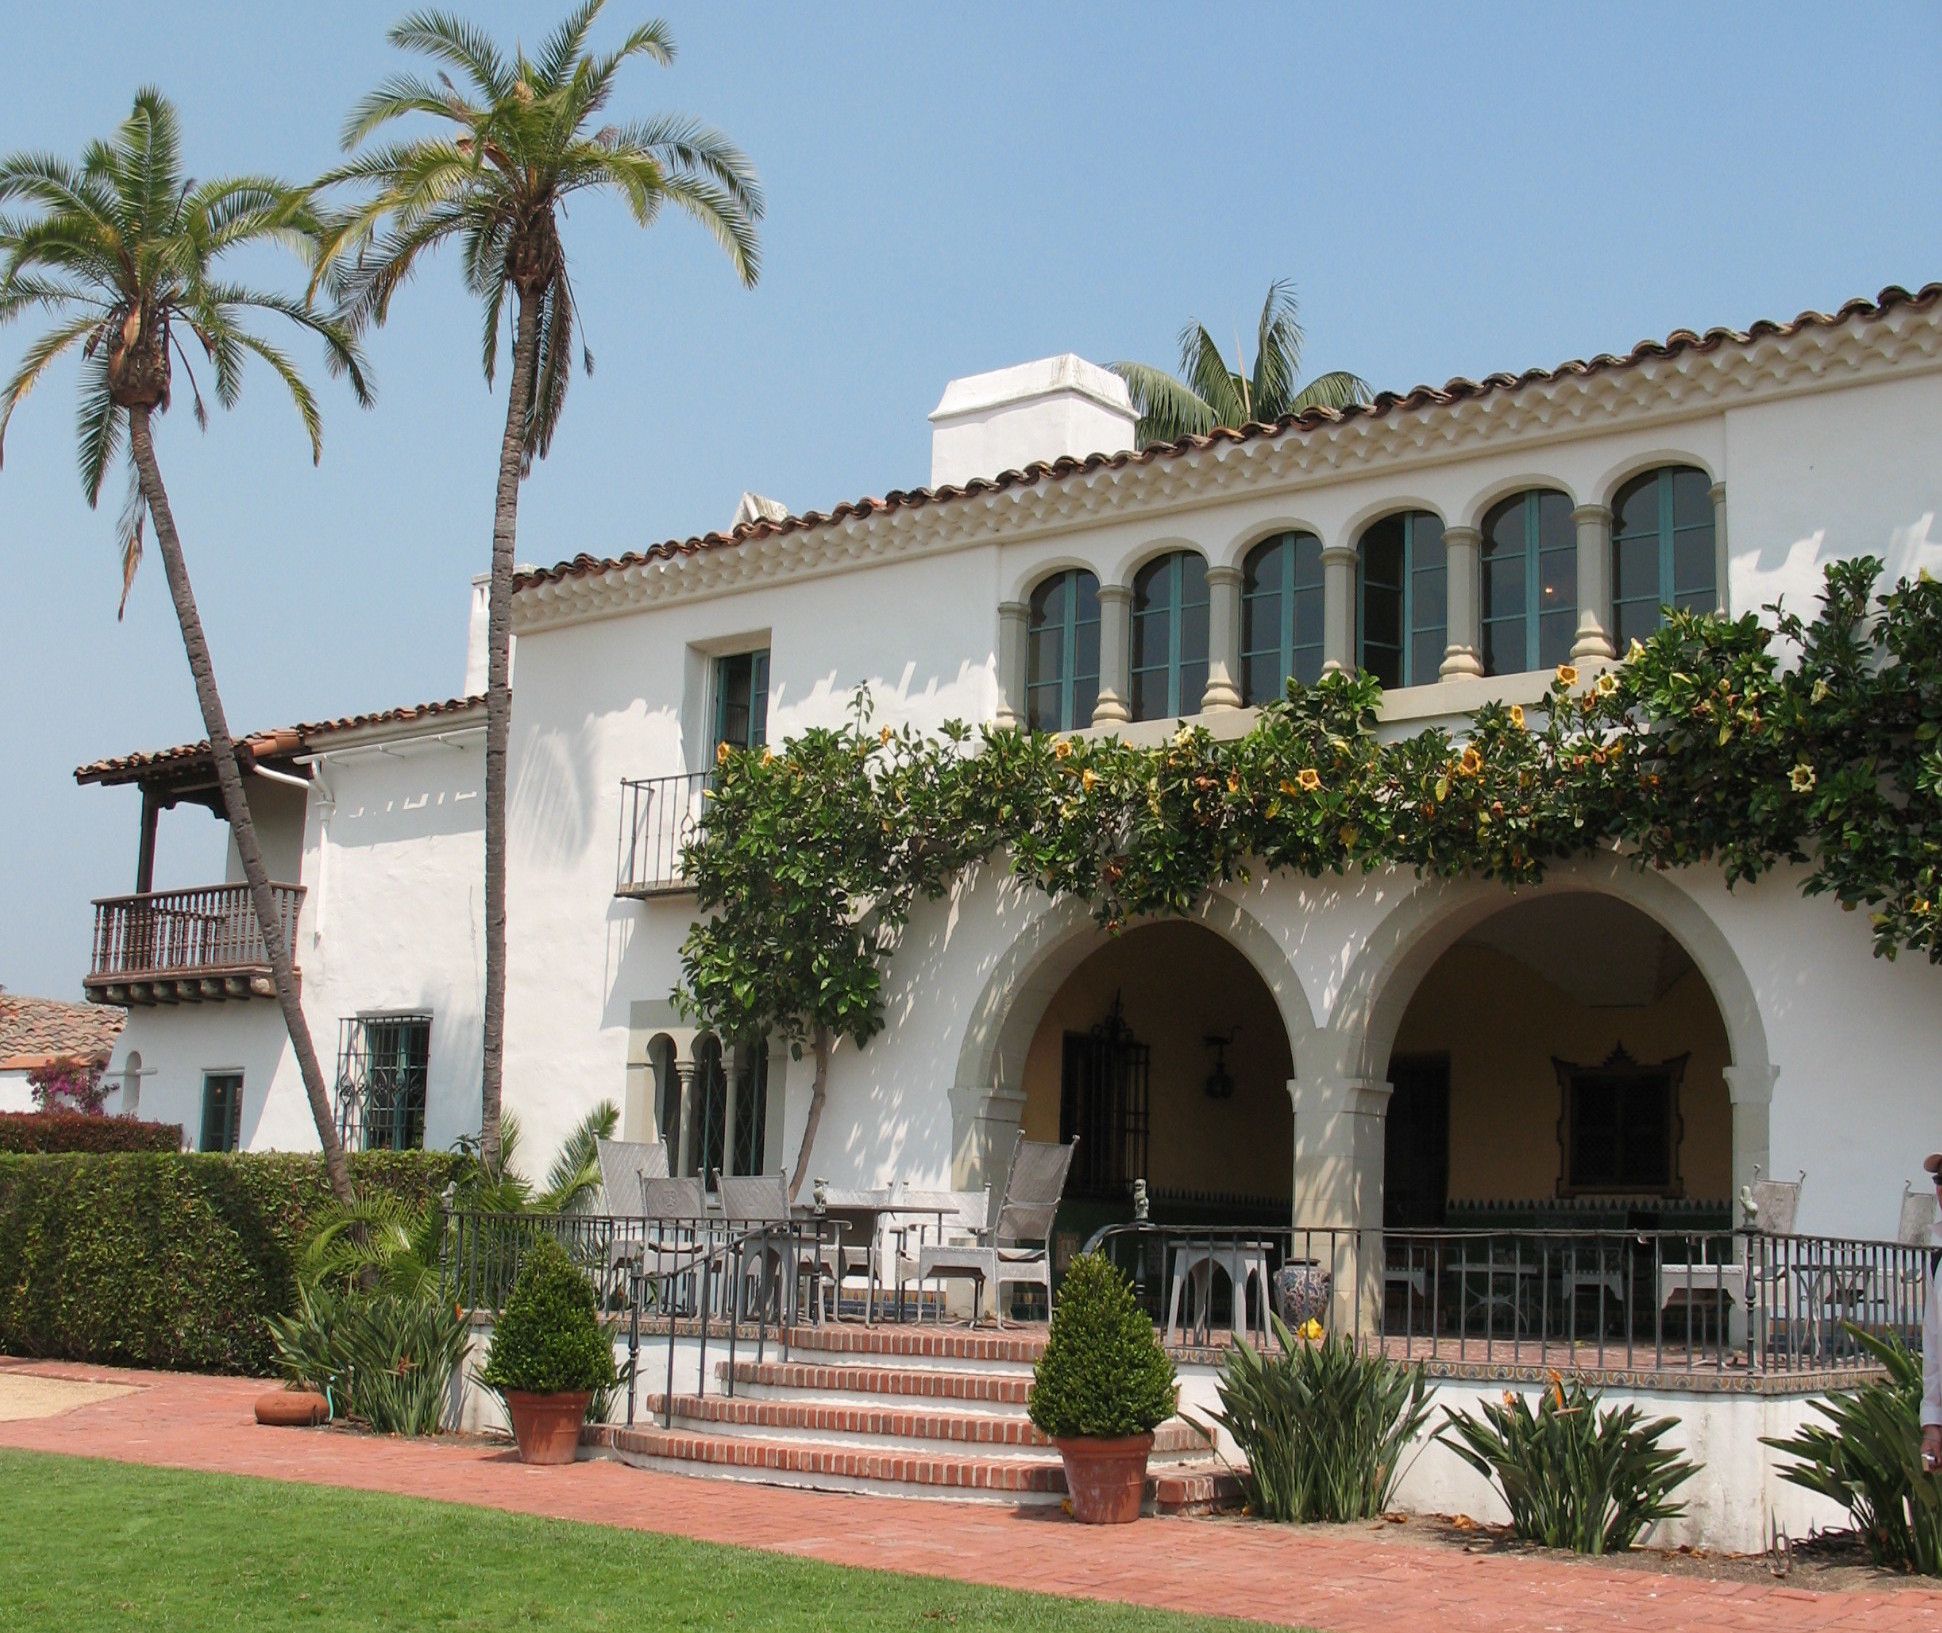 Casa del Herrero, a classic Spanish Colonial Revival building in Santa Barbara, CA